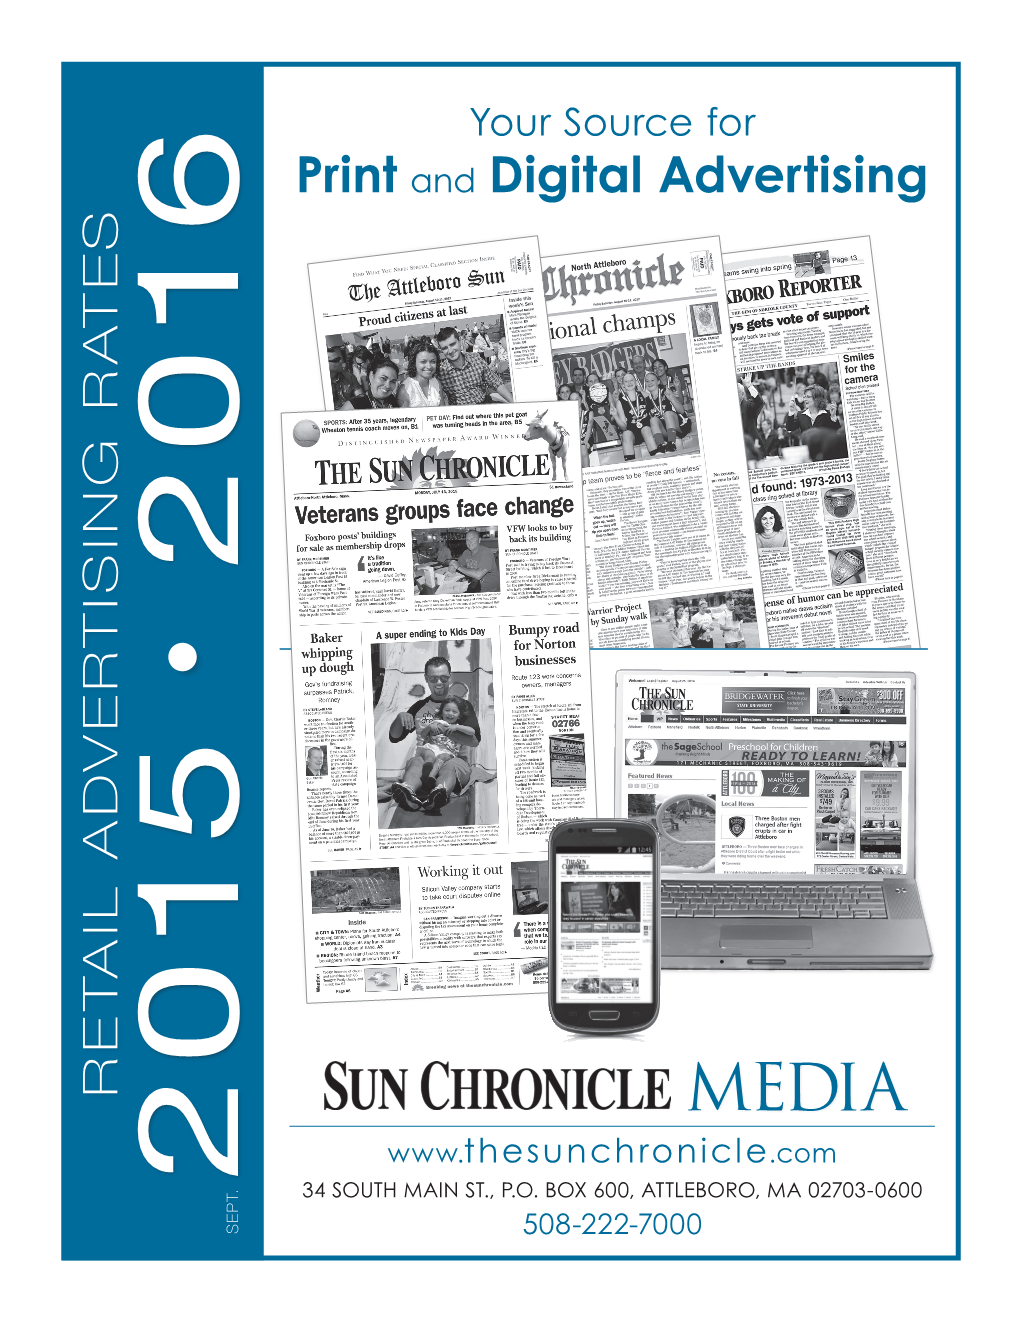 Print and Digital Advertising 2016 Tising Rates